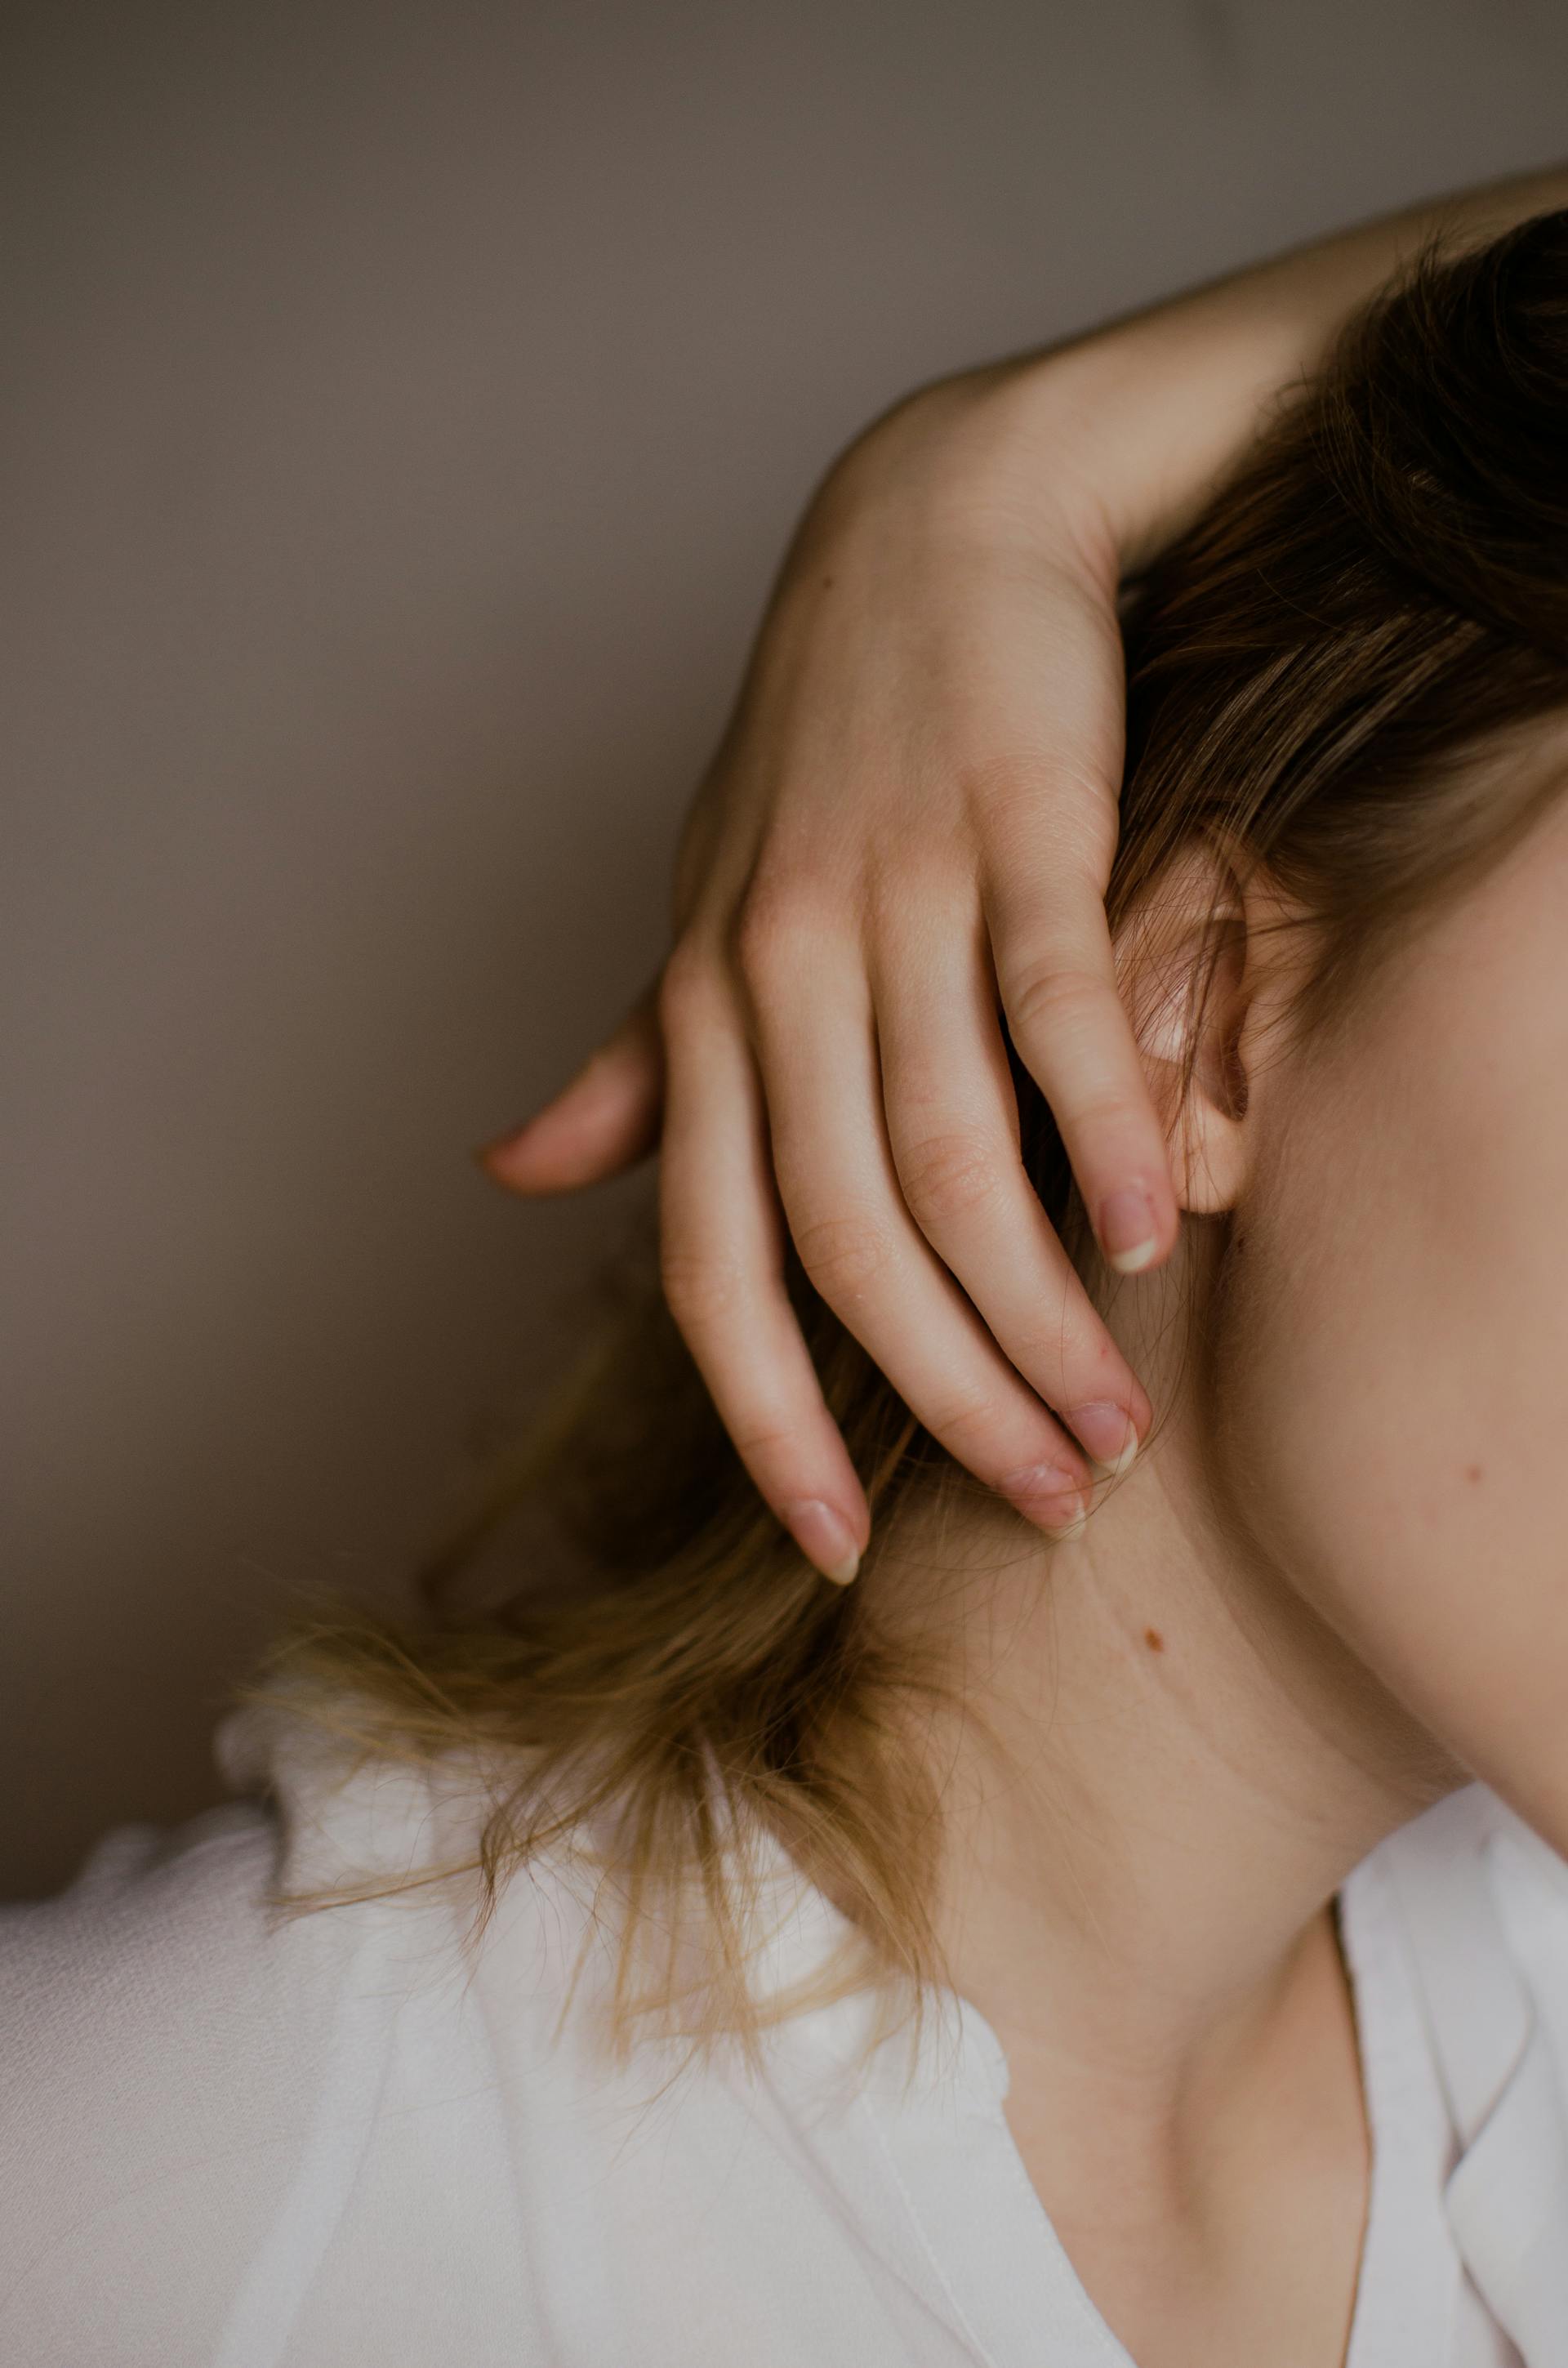 A birthmark on a woman's neck | Source: Pexels